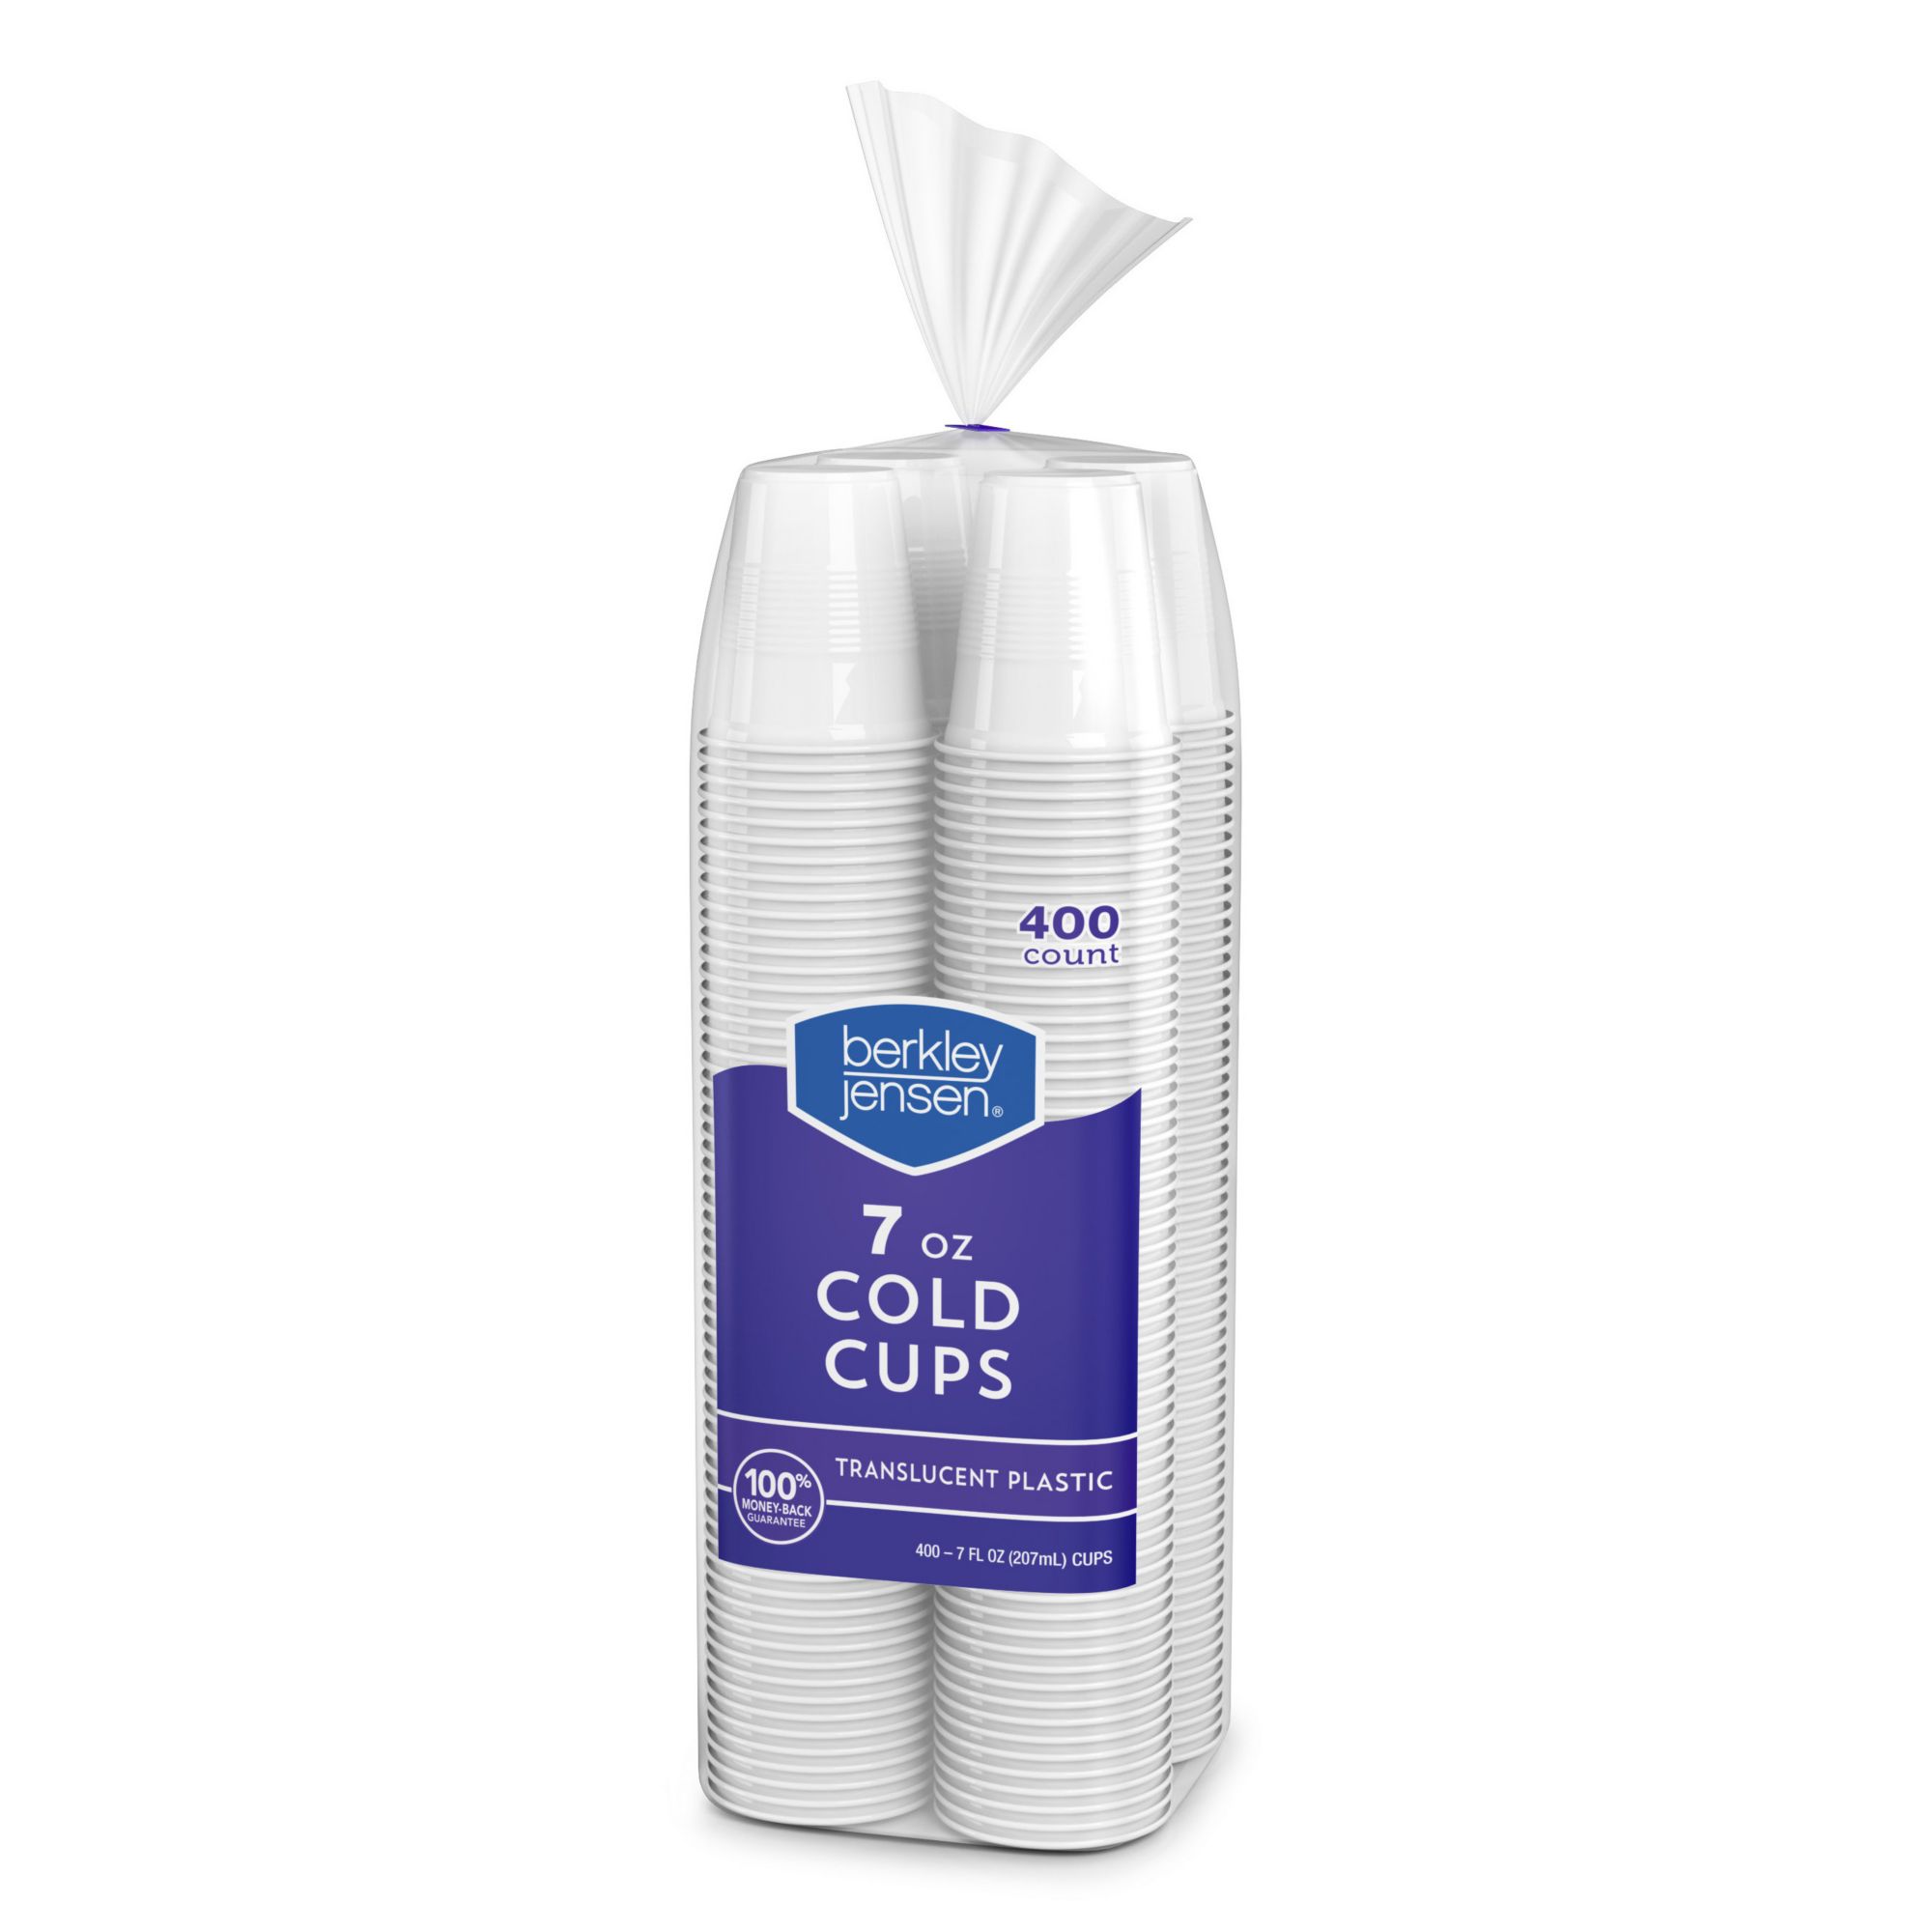 Perk™ Plastic Cold Cup, 16 Oz., Blue, 50/Pack (PK45561)